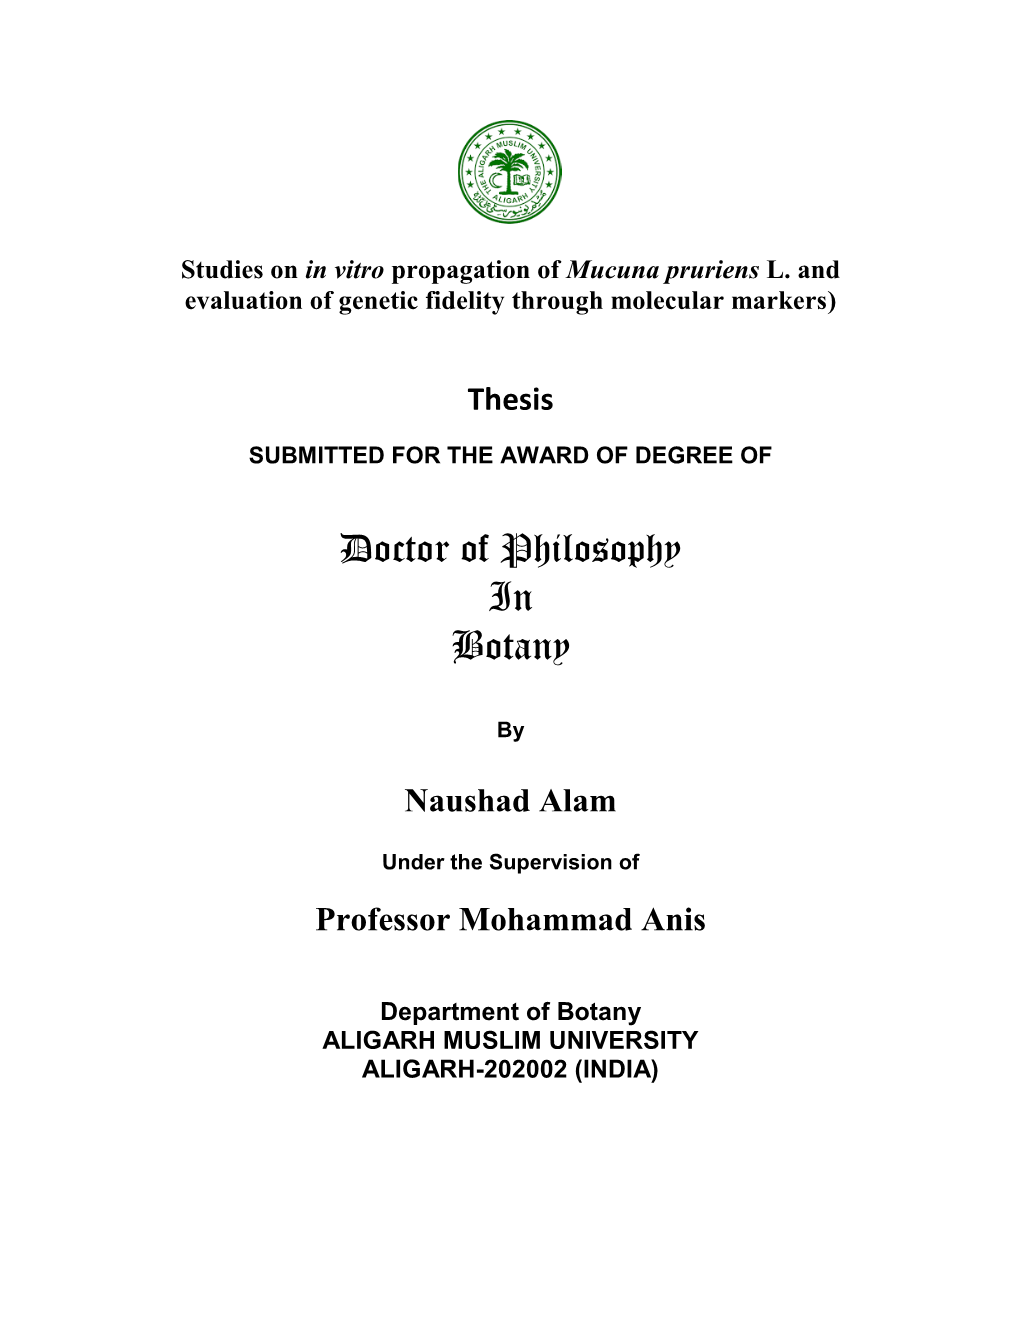 Doctor of Philosophy in Botany